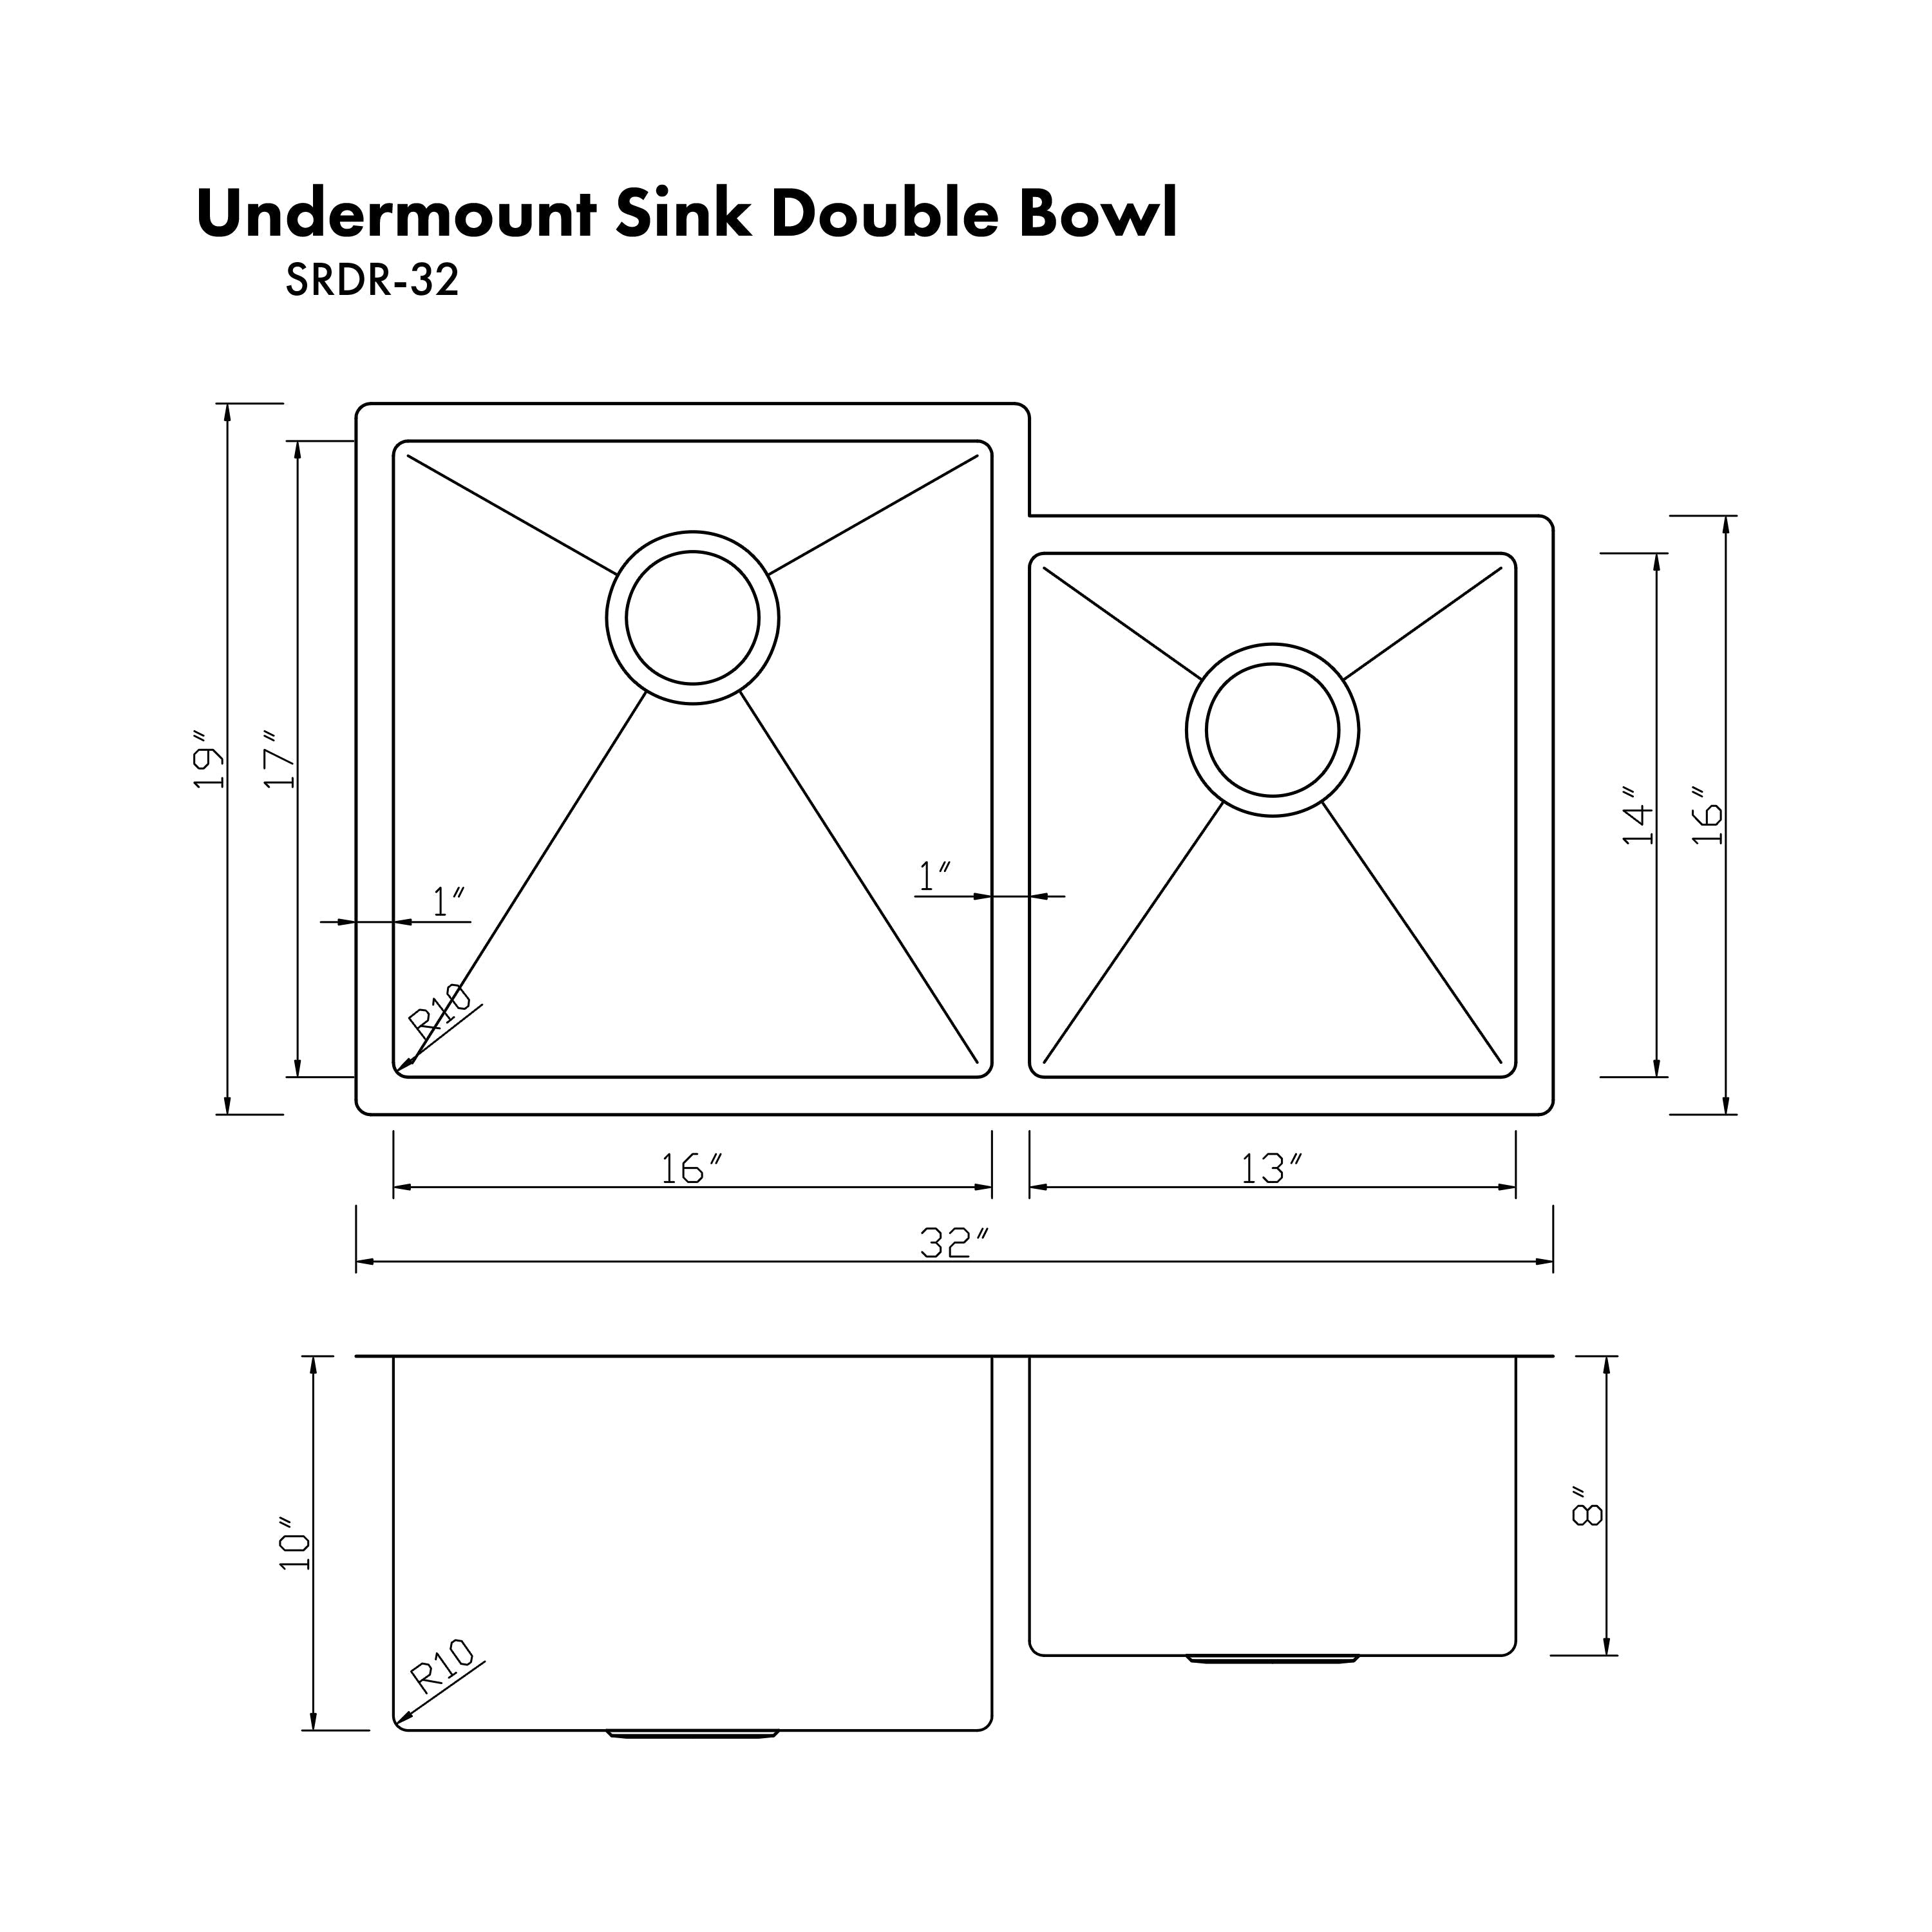 ZLINE 32" Jackson Undermount Double Bowl Kitchen Sink with Bottom Grid (SRDR-32S)